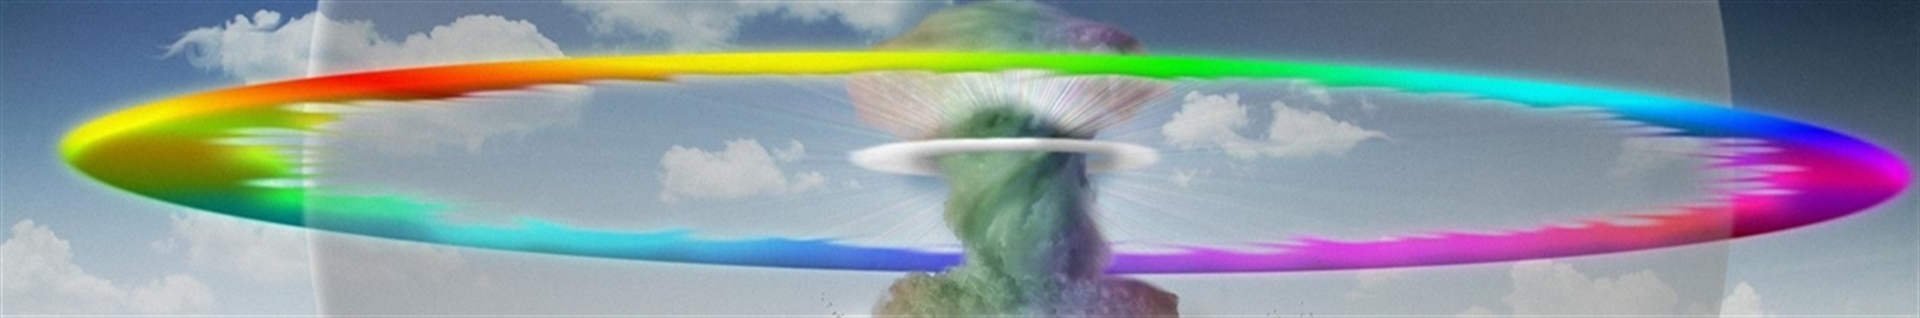 Only Rainbow dash in world(اولین و تنهاترین رینبودش در گروه پونی و جهان)